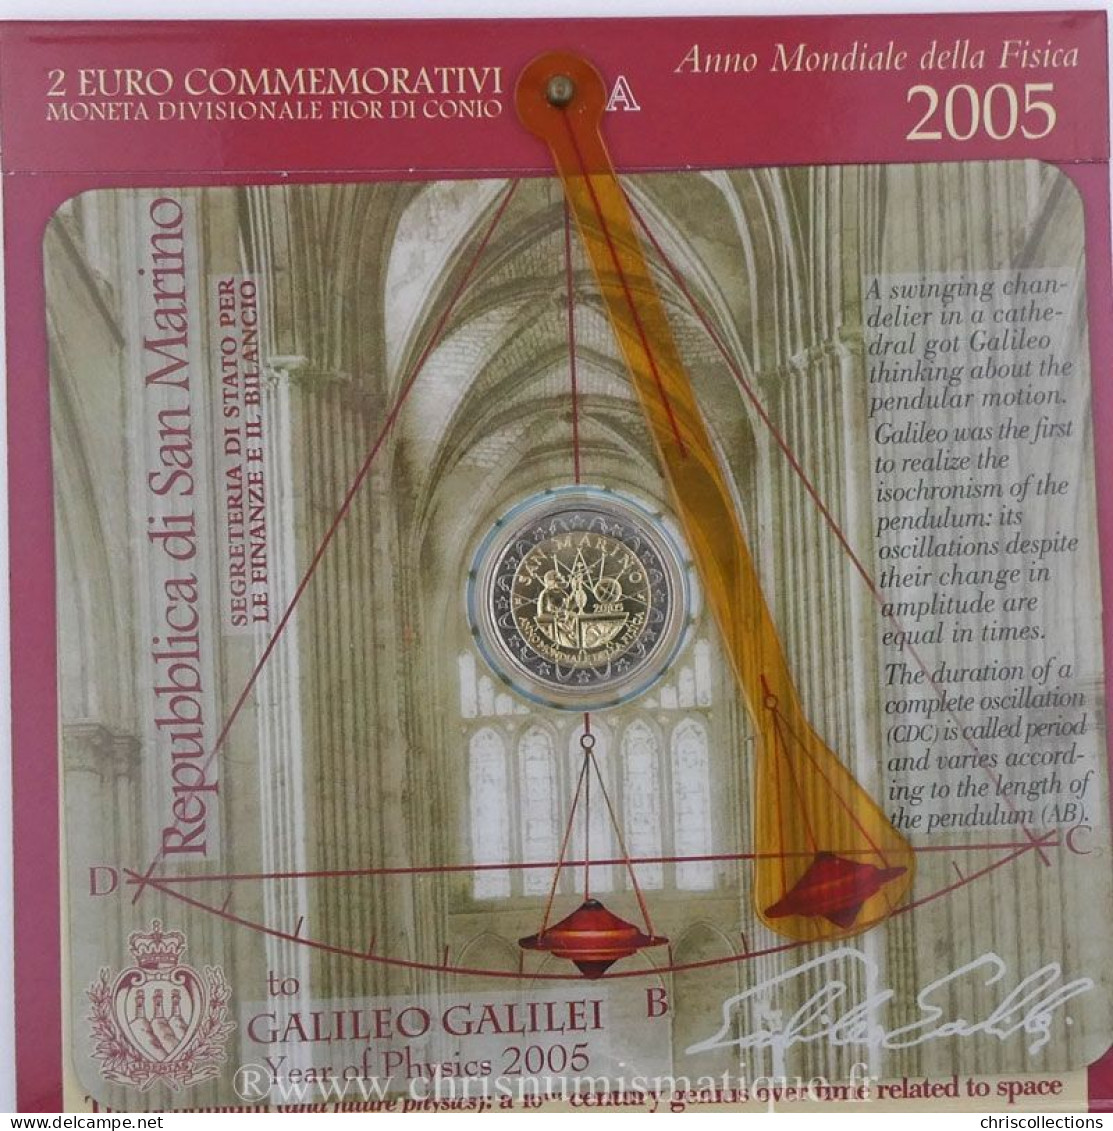 Euro, Saint Marin , San Marino, 2 Euro 2005, Galileo Galilei - San Marino